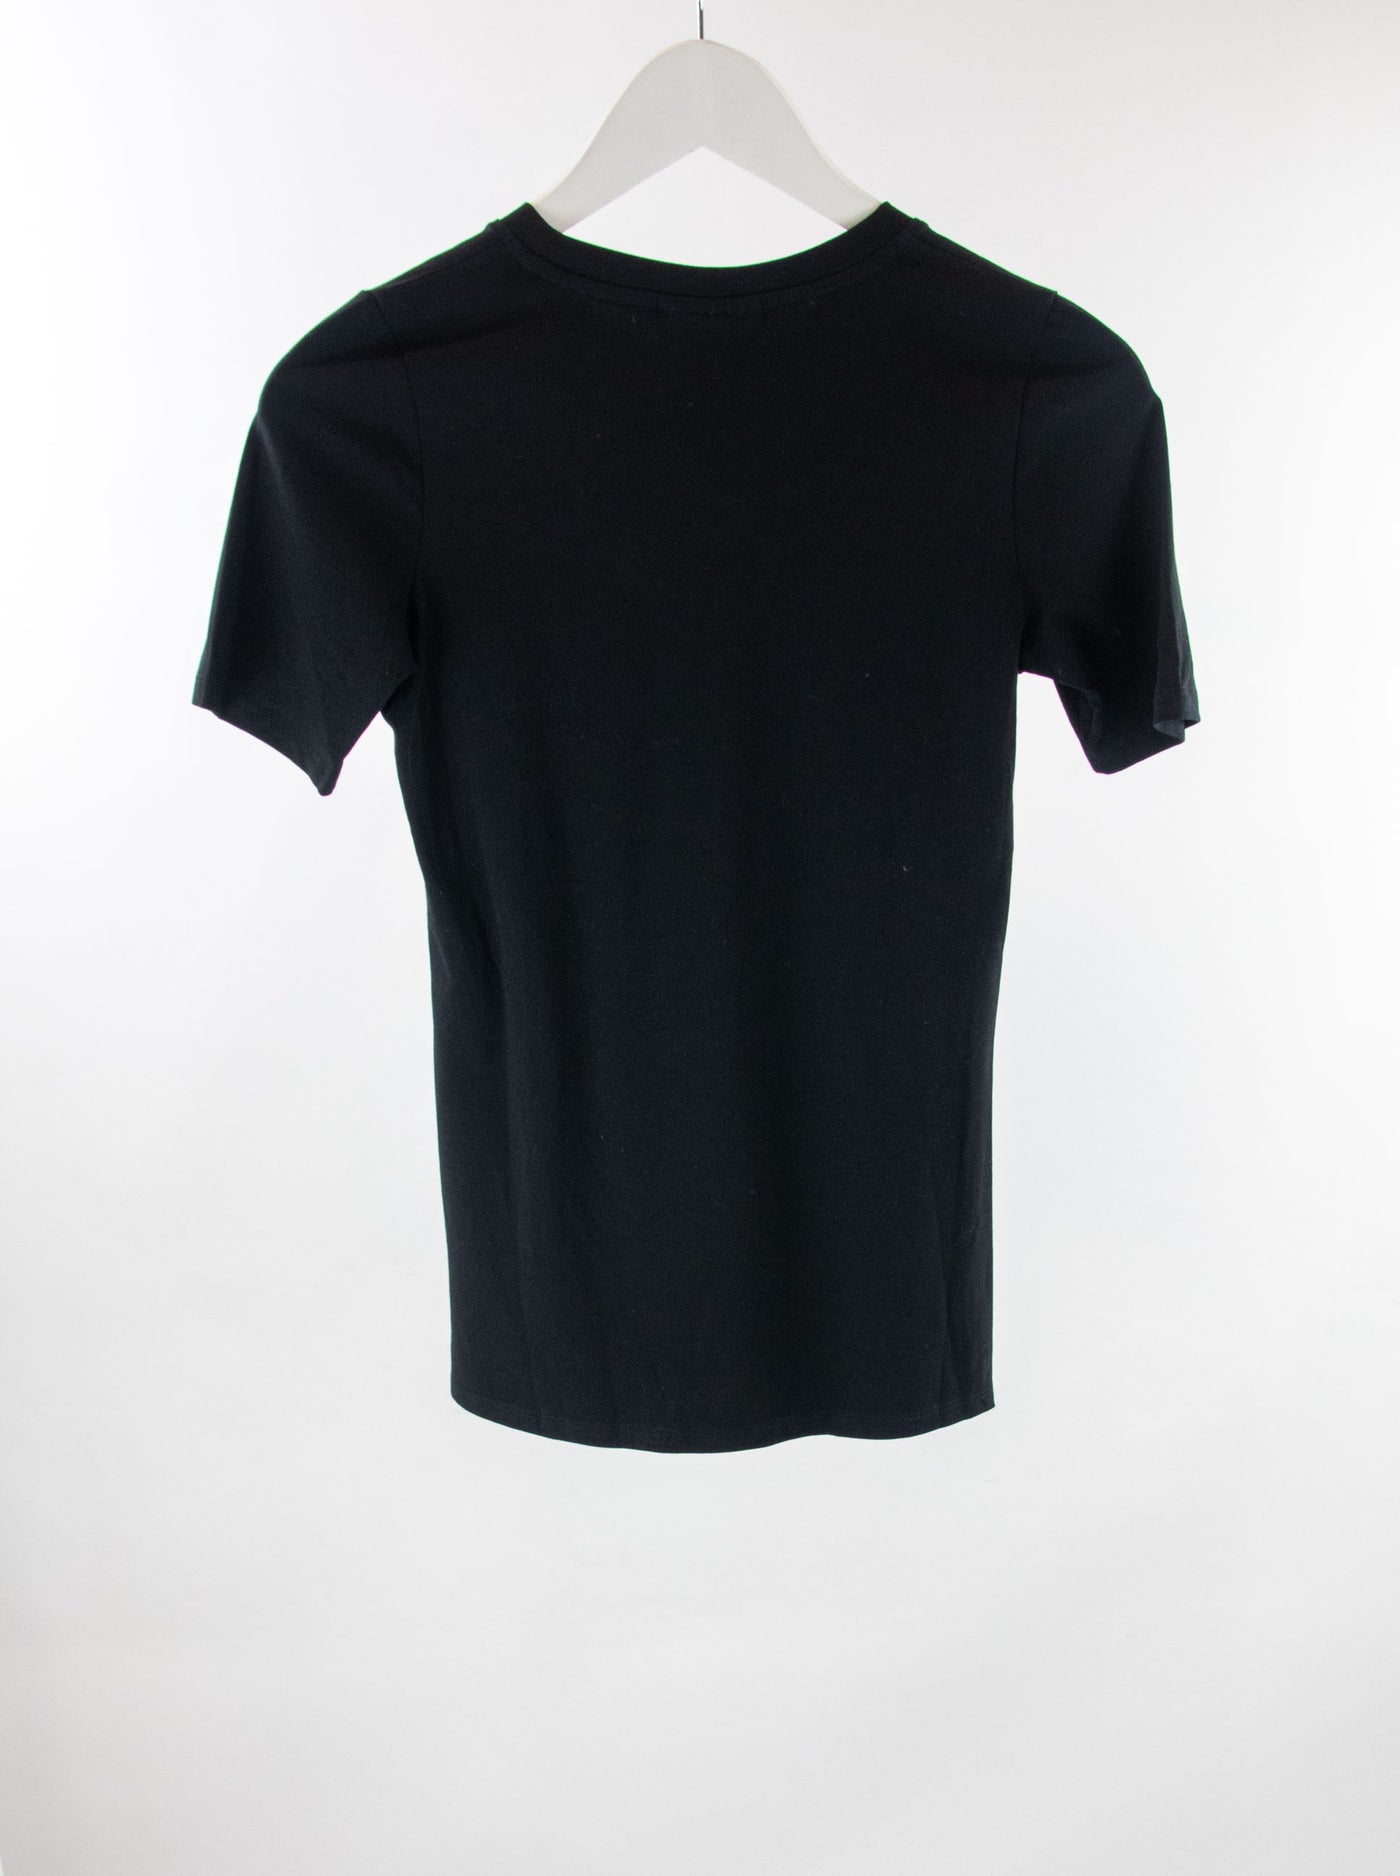 Camiseta negra básica